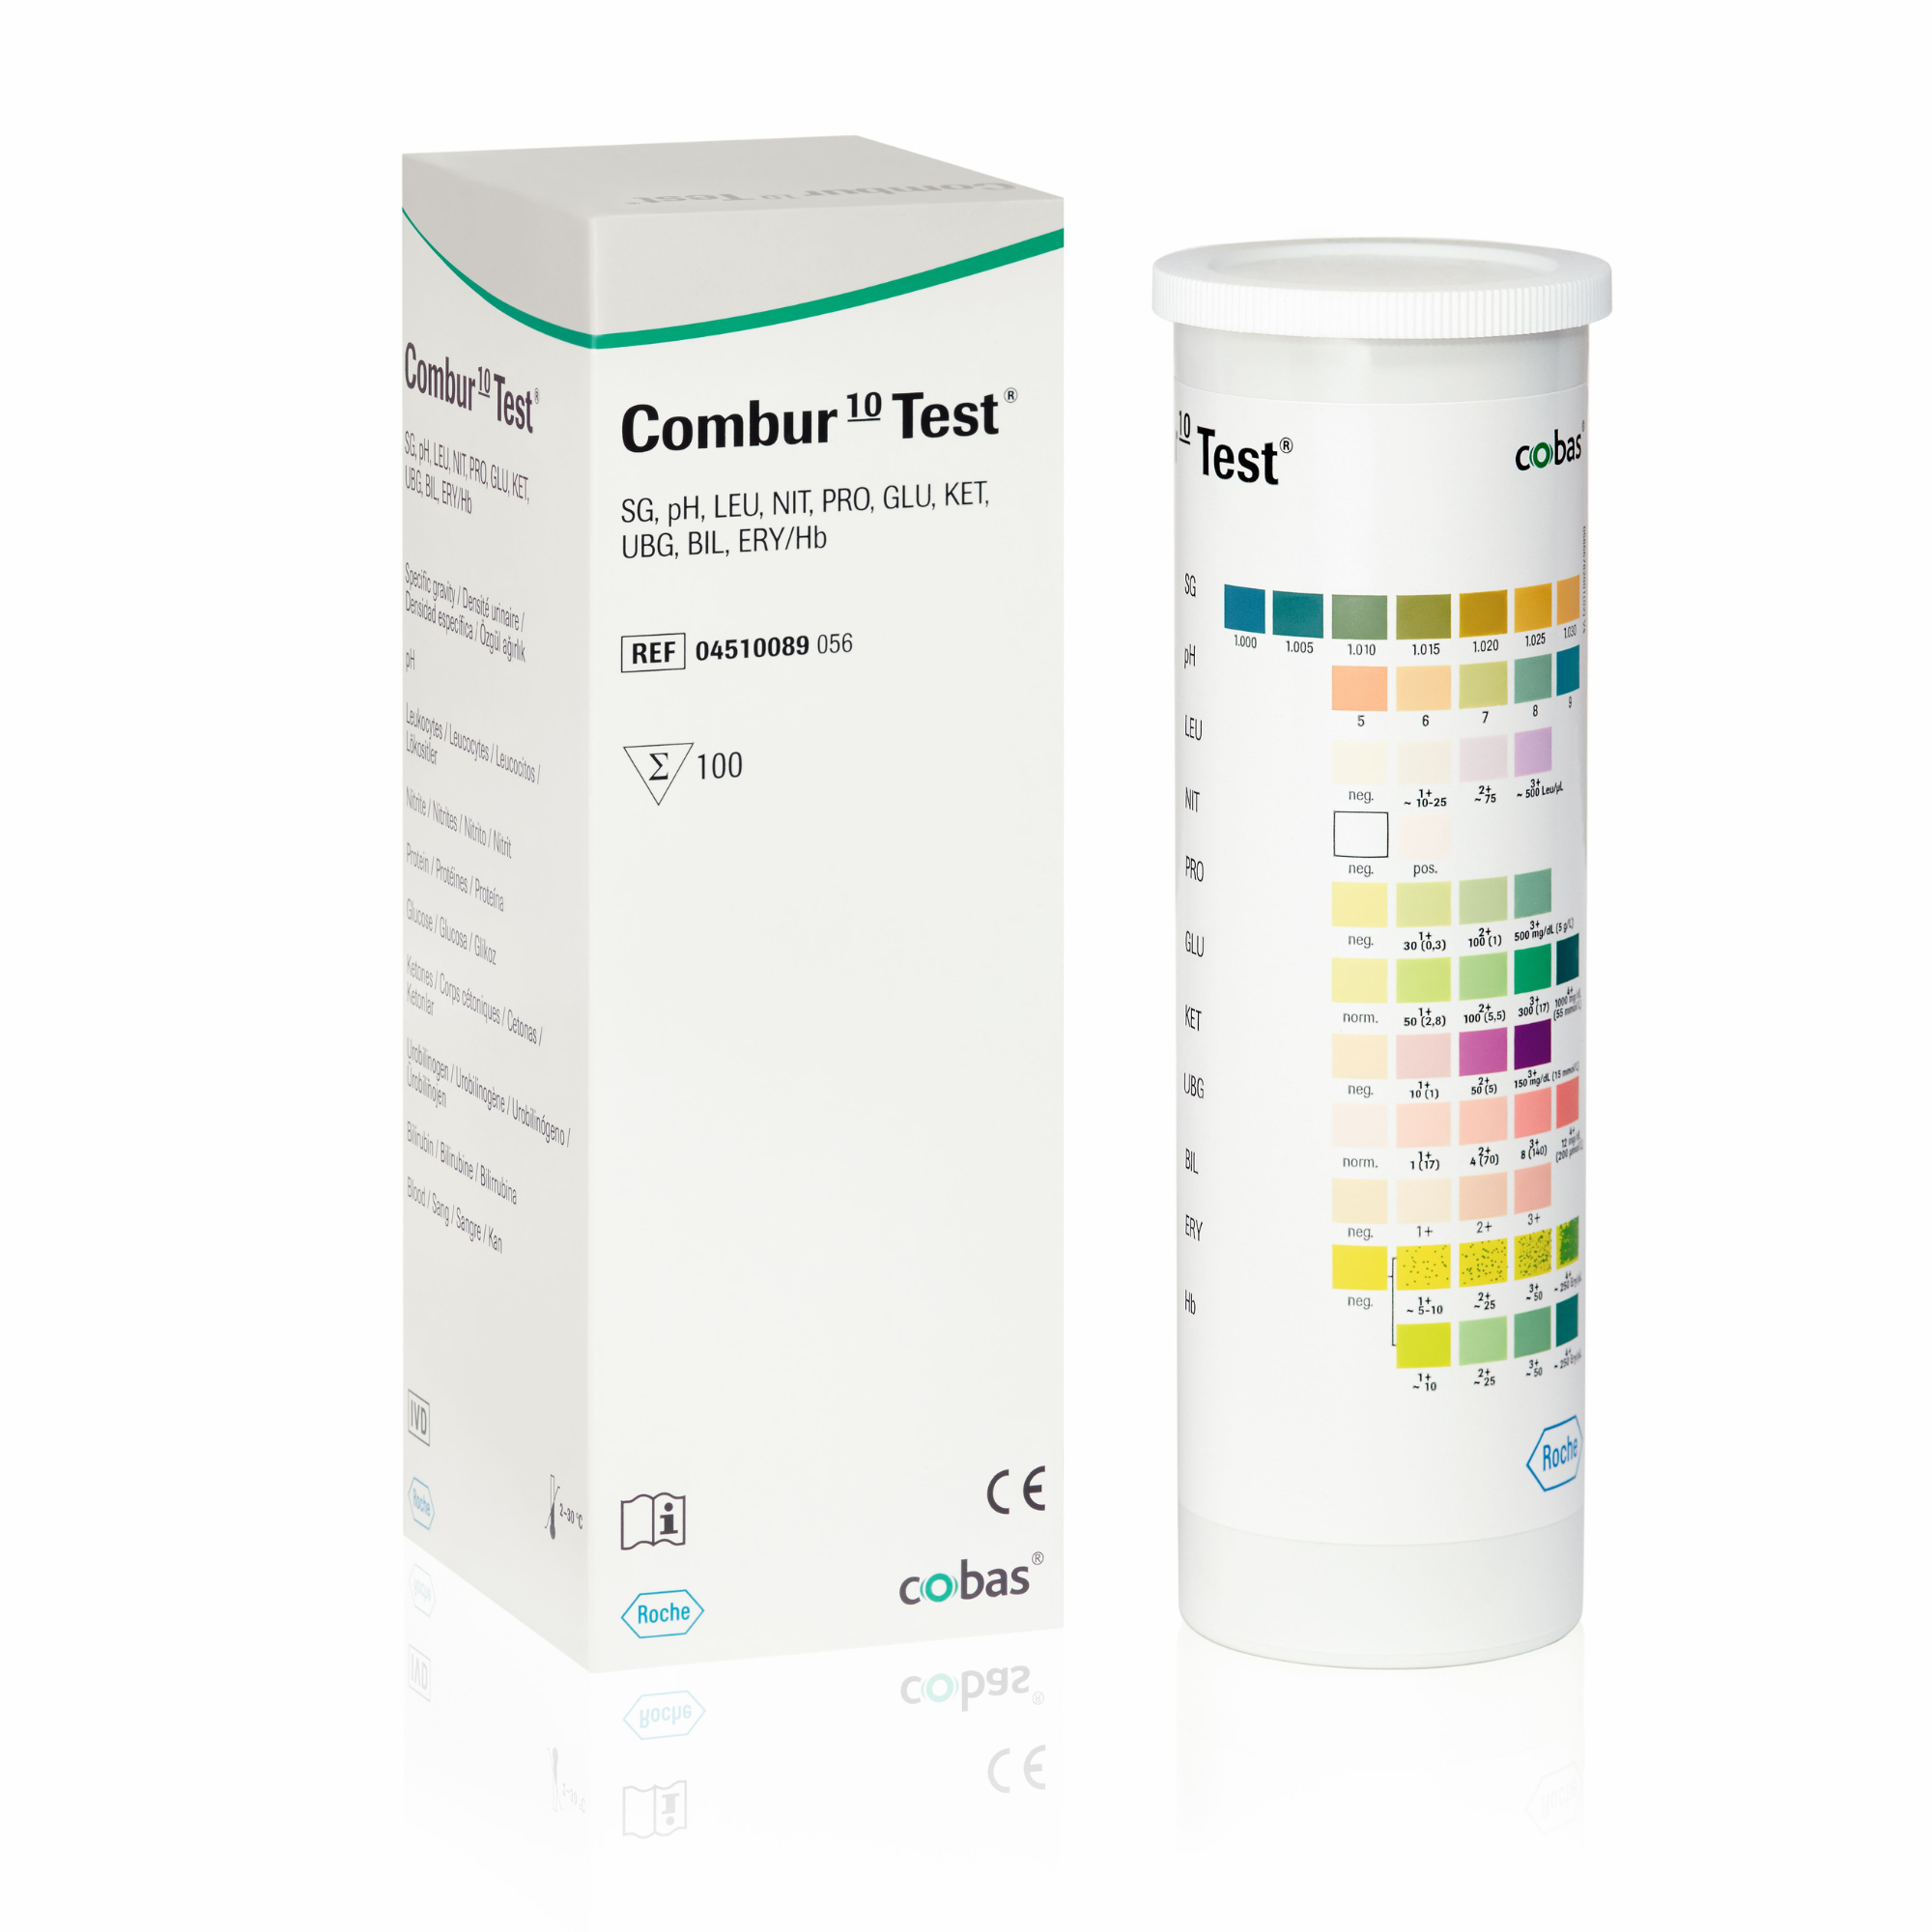 Bandelettes urinaires Combur Test